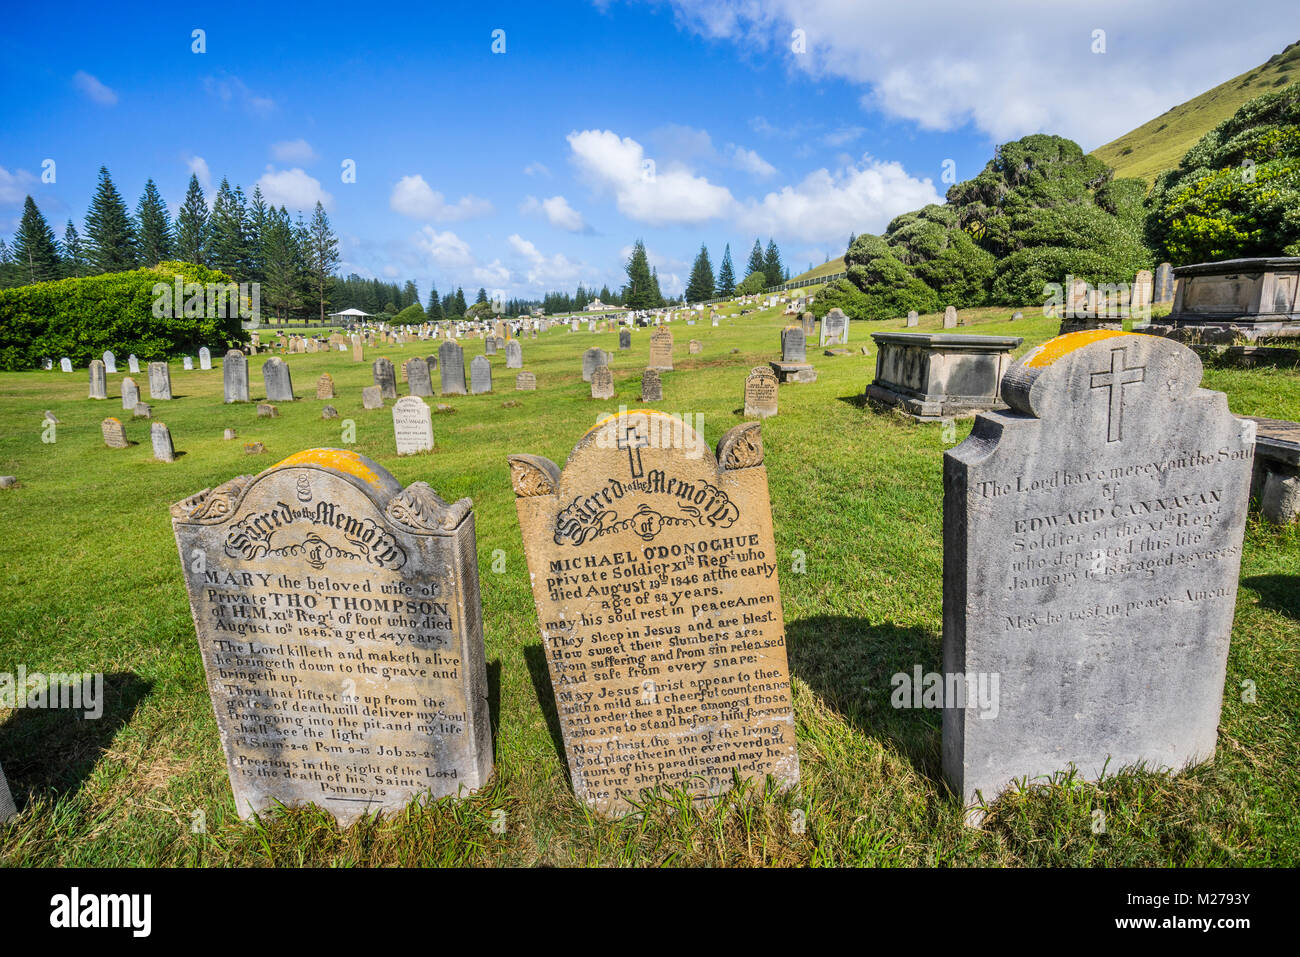 Isola Norfolk, australiano territorio esterno, Kingston, la storica Isola Norfolk cimitero comprende tombe dei carcerati, soldati e Pitcairn Islan Foto Stock